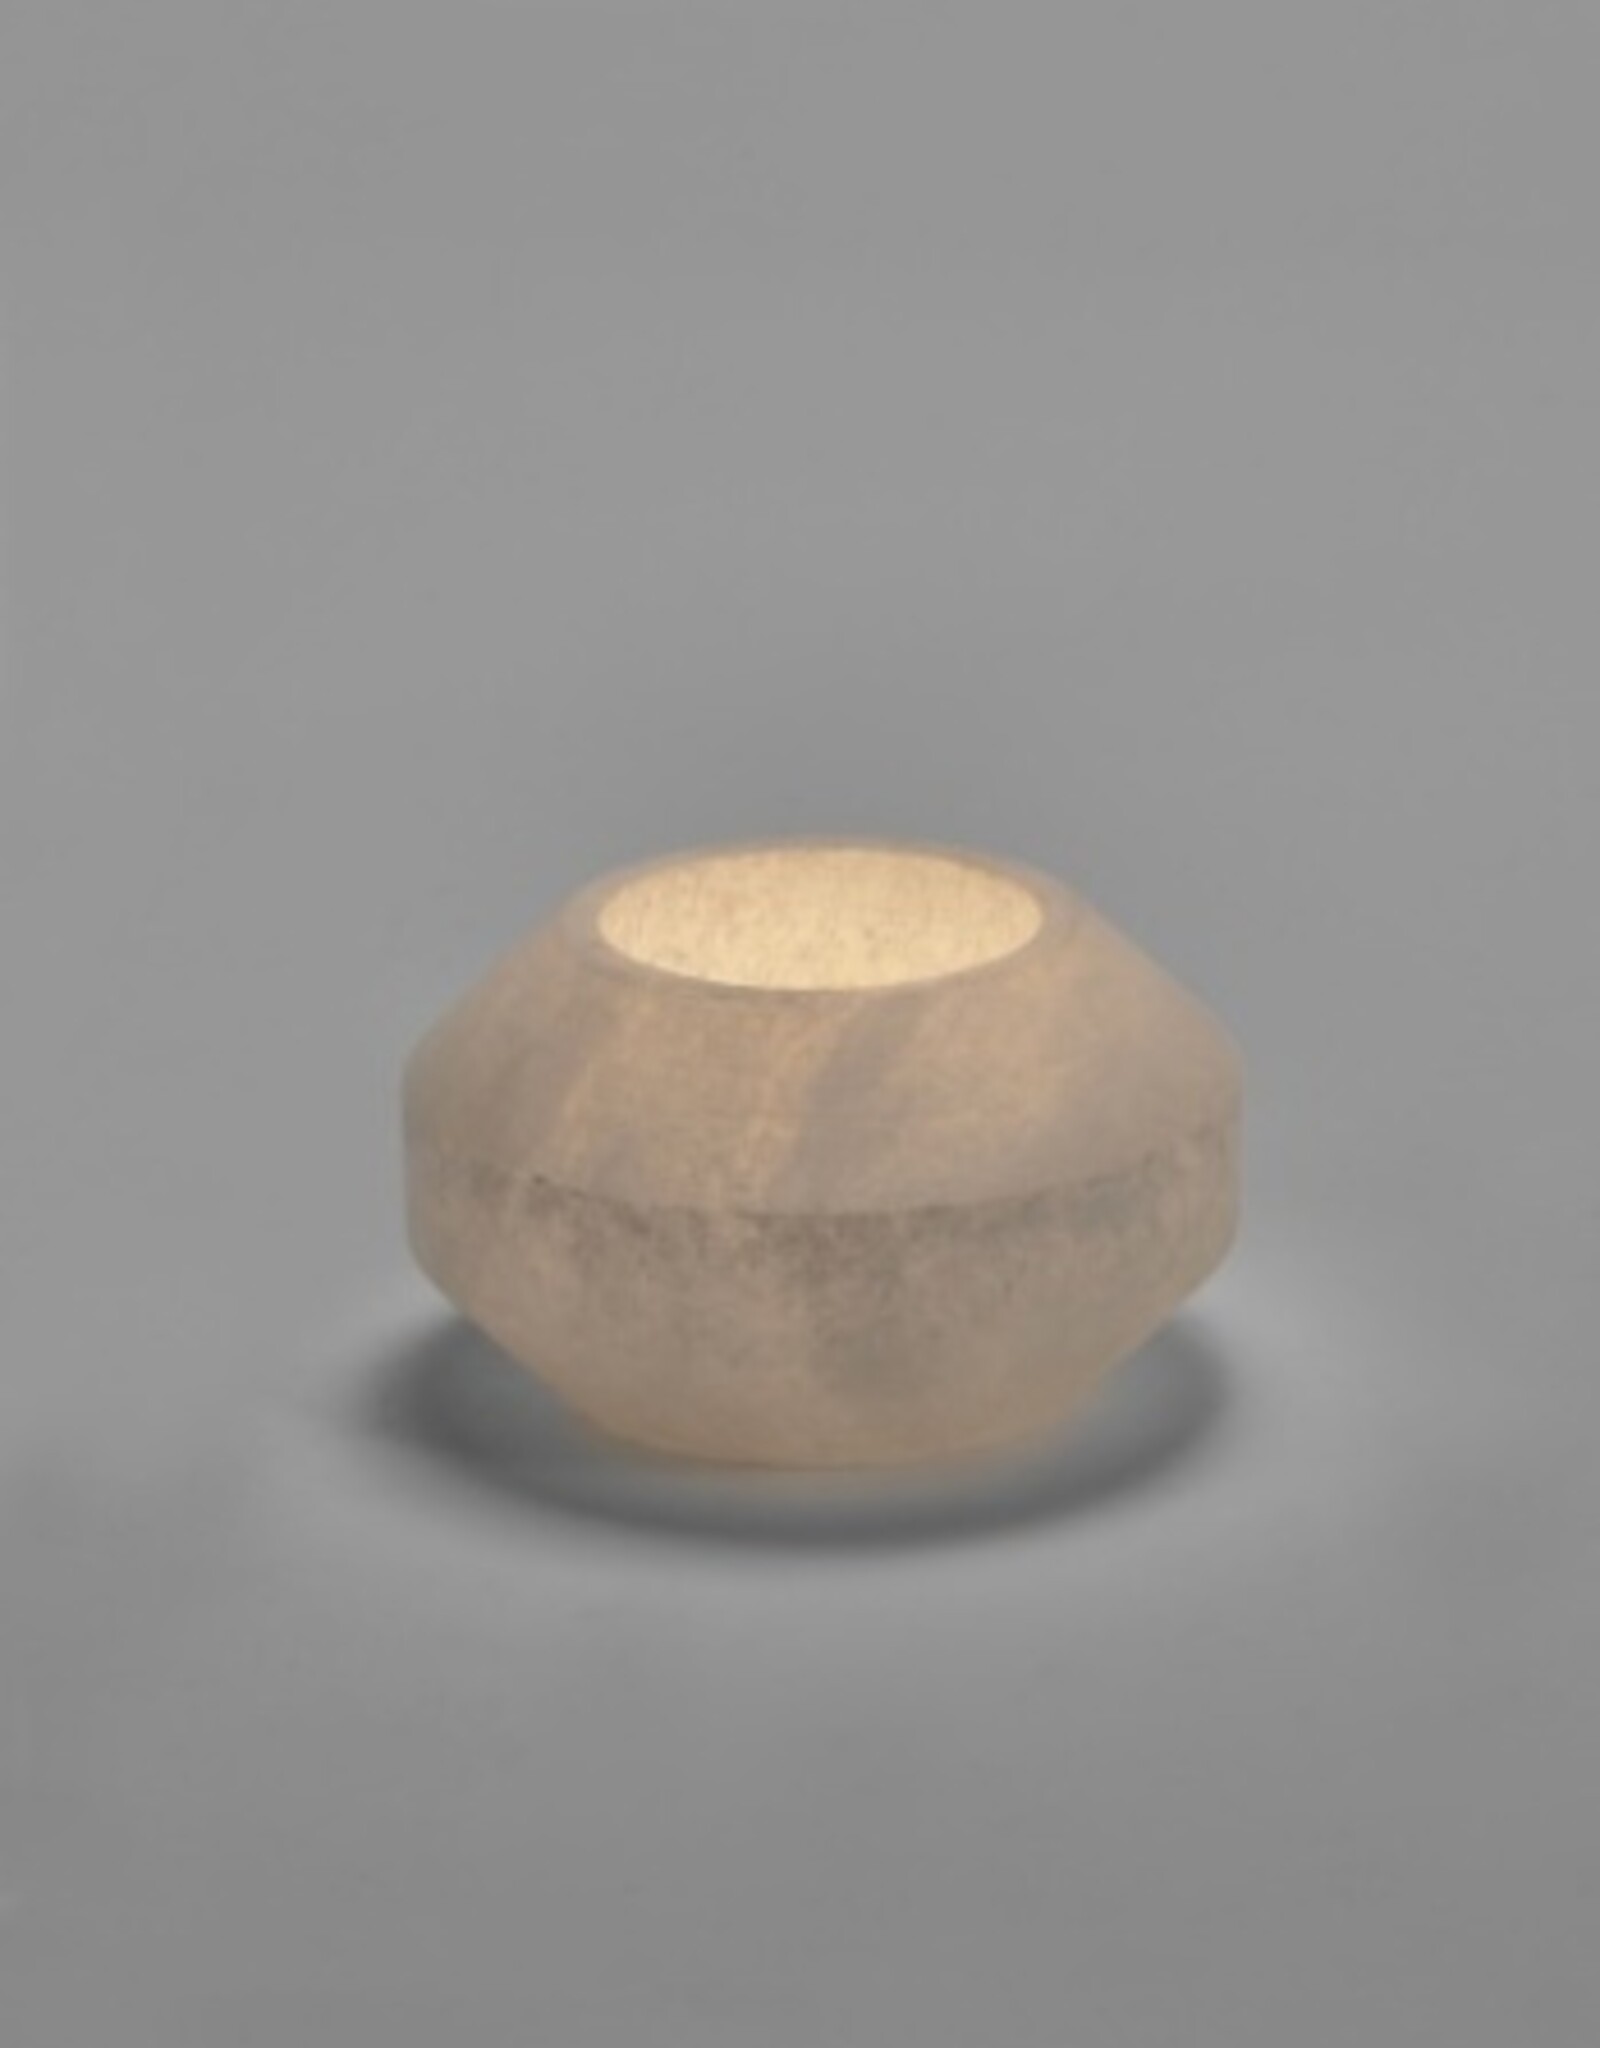 Serax candle holder 'Alabaster' - white